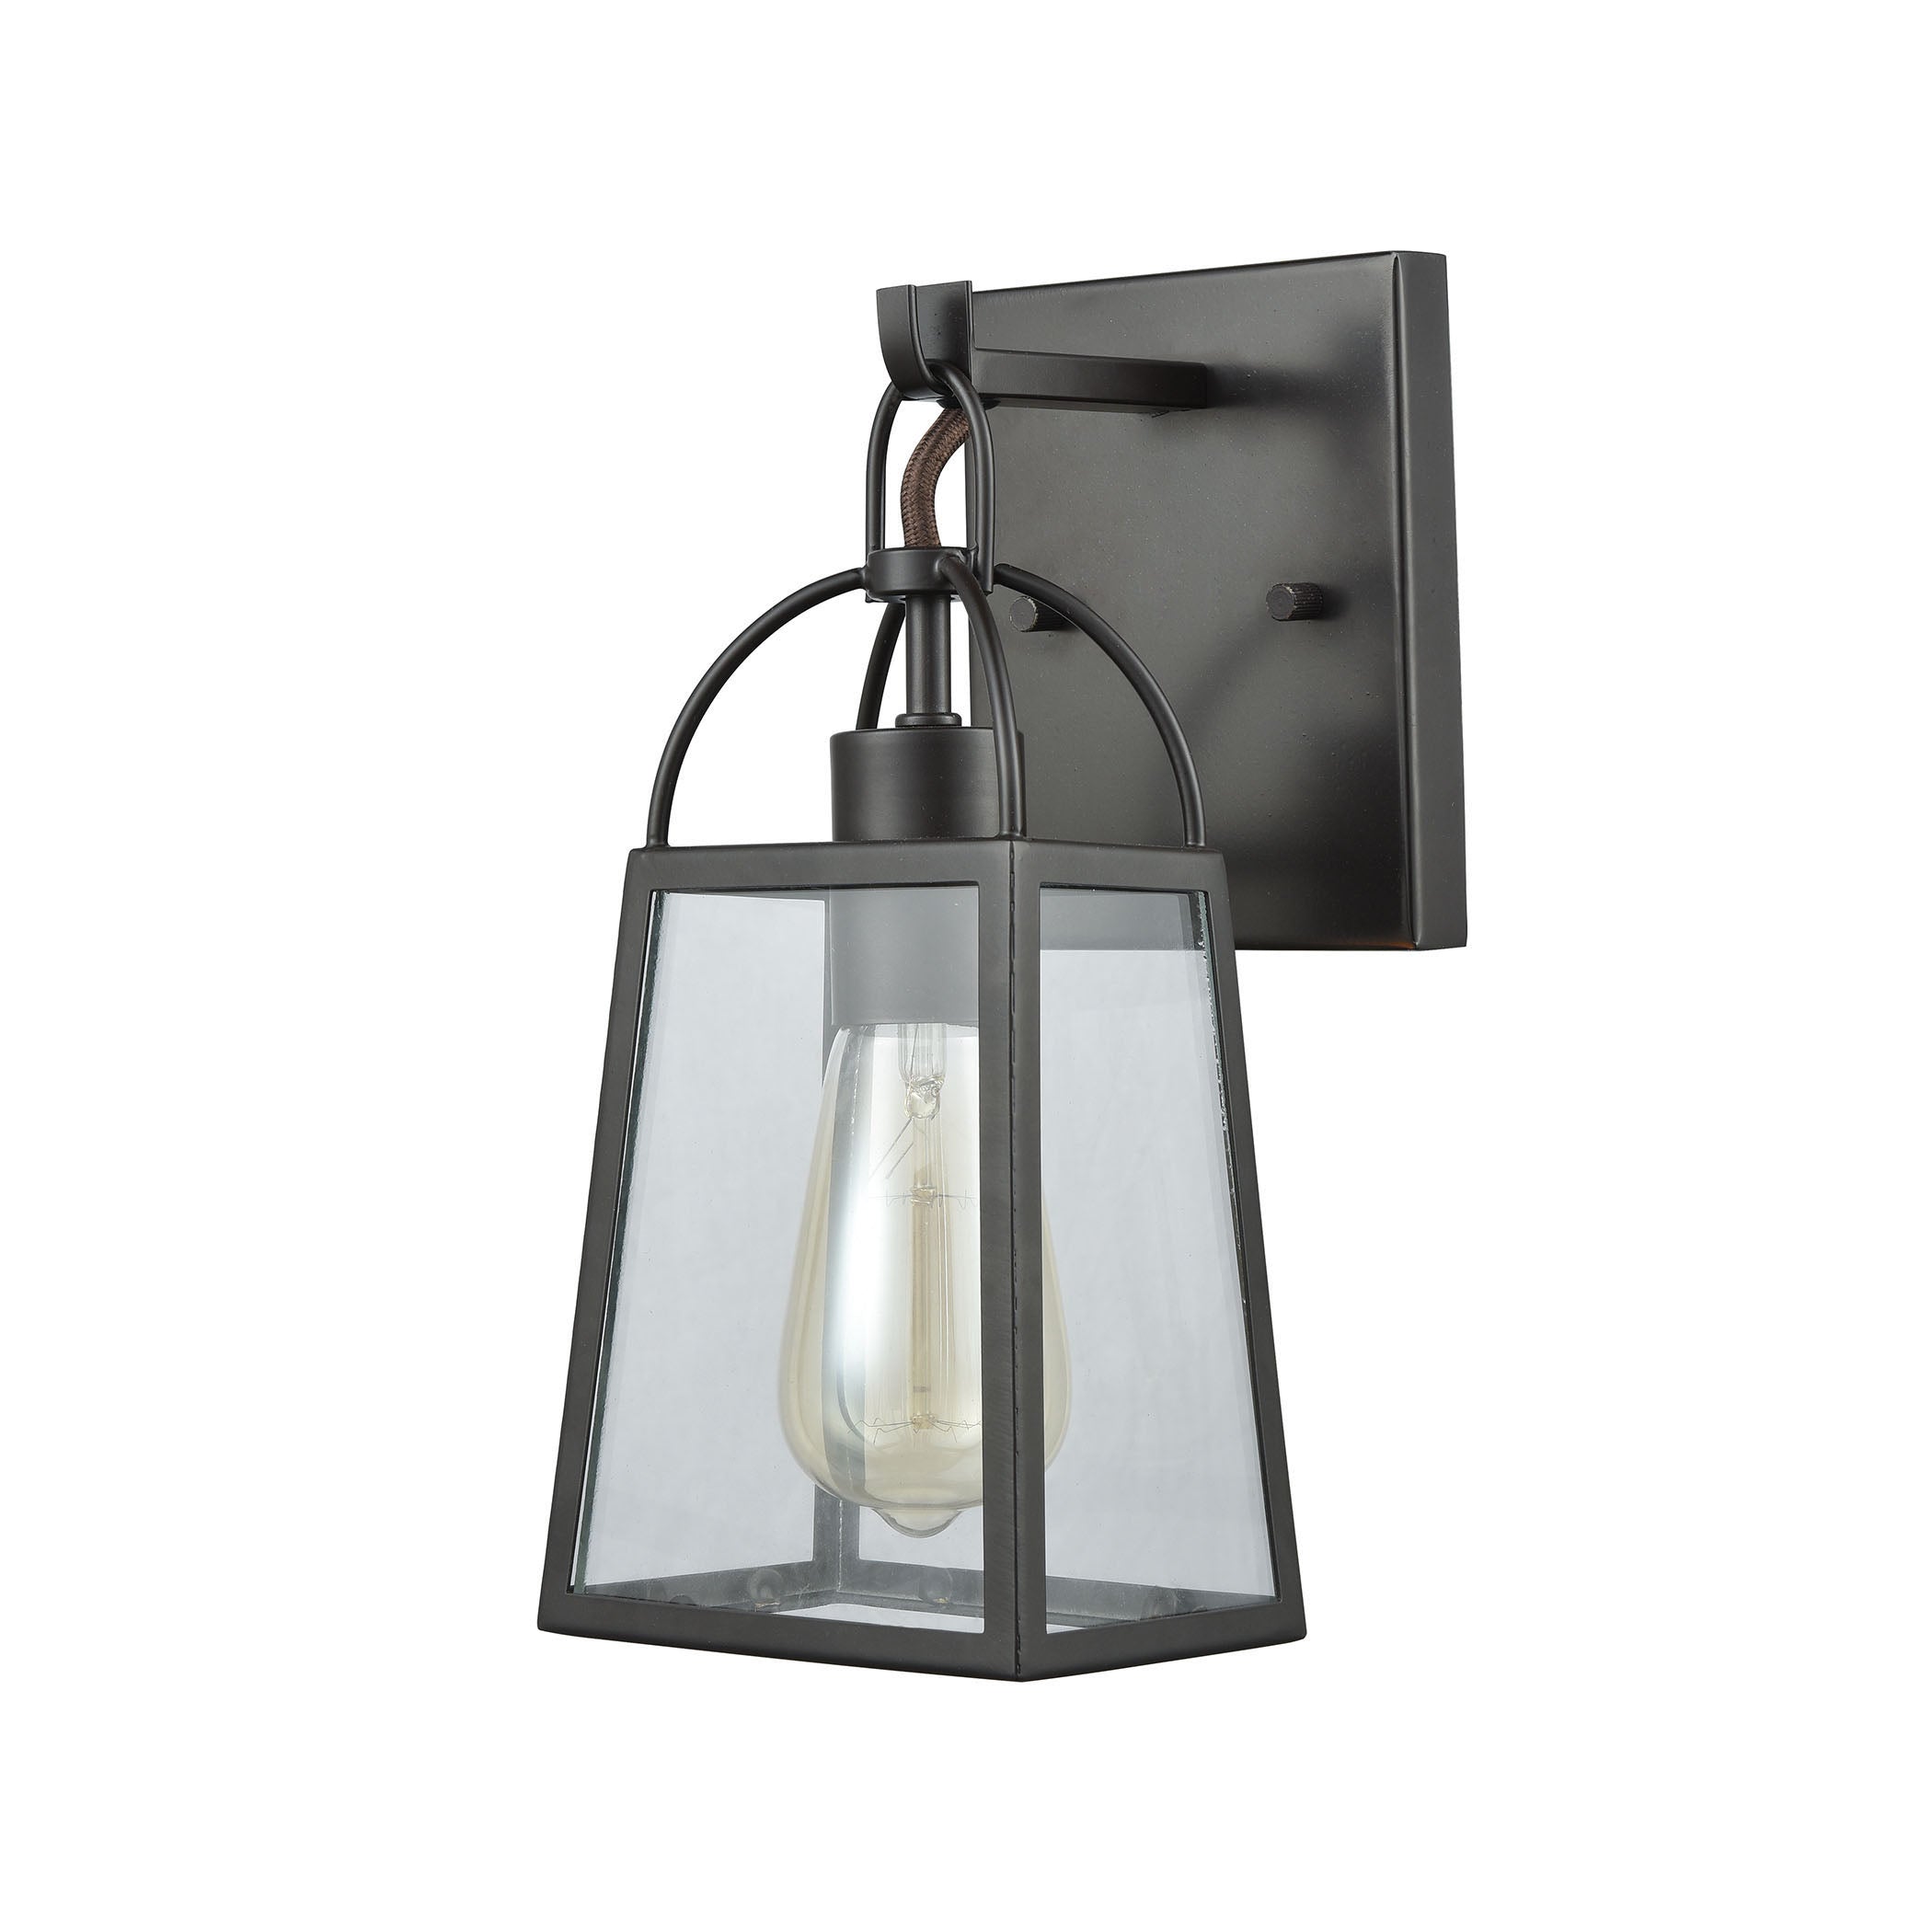 ELK Lighting 46270/1 Barnside 1-Light Vanity Lamp in Oil Rubbed Bronze with Clear Glass Panels